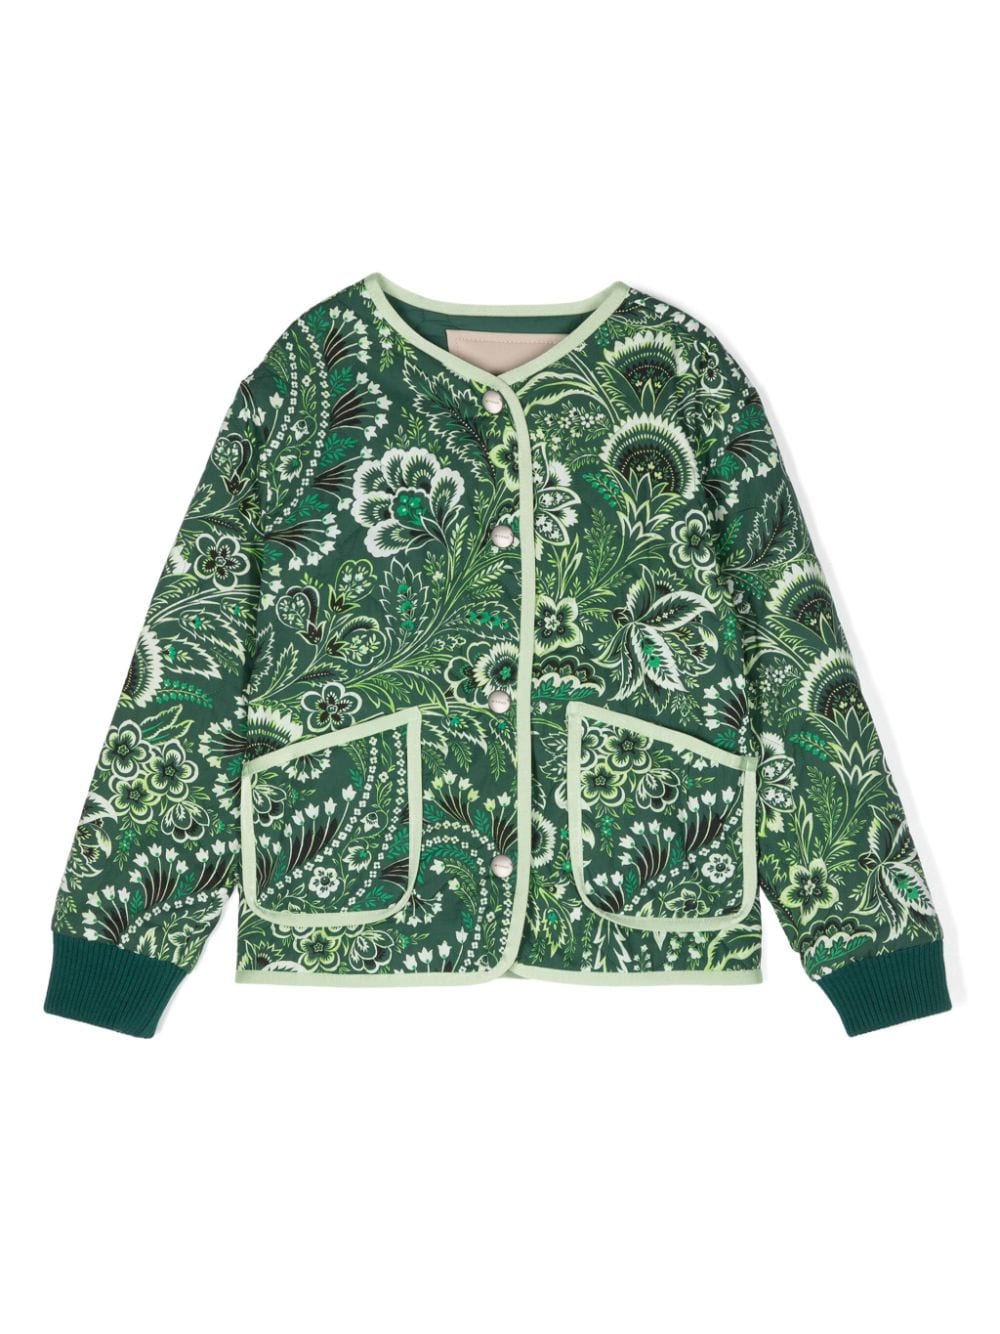 ETRO KIDS floral-print jacket - Verde